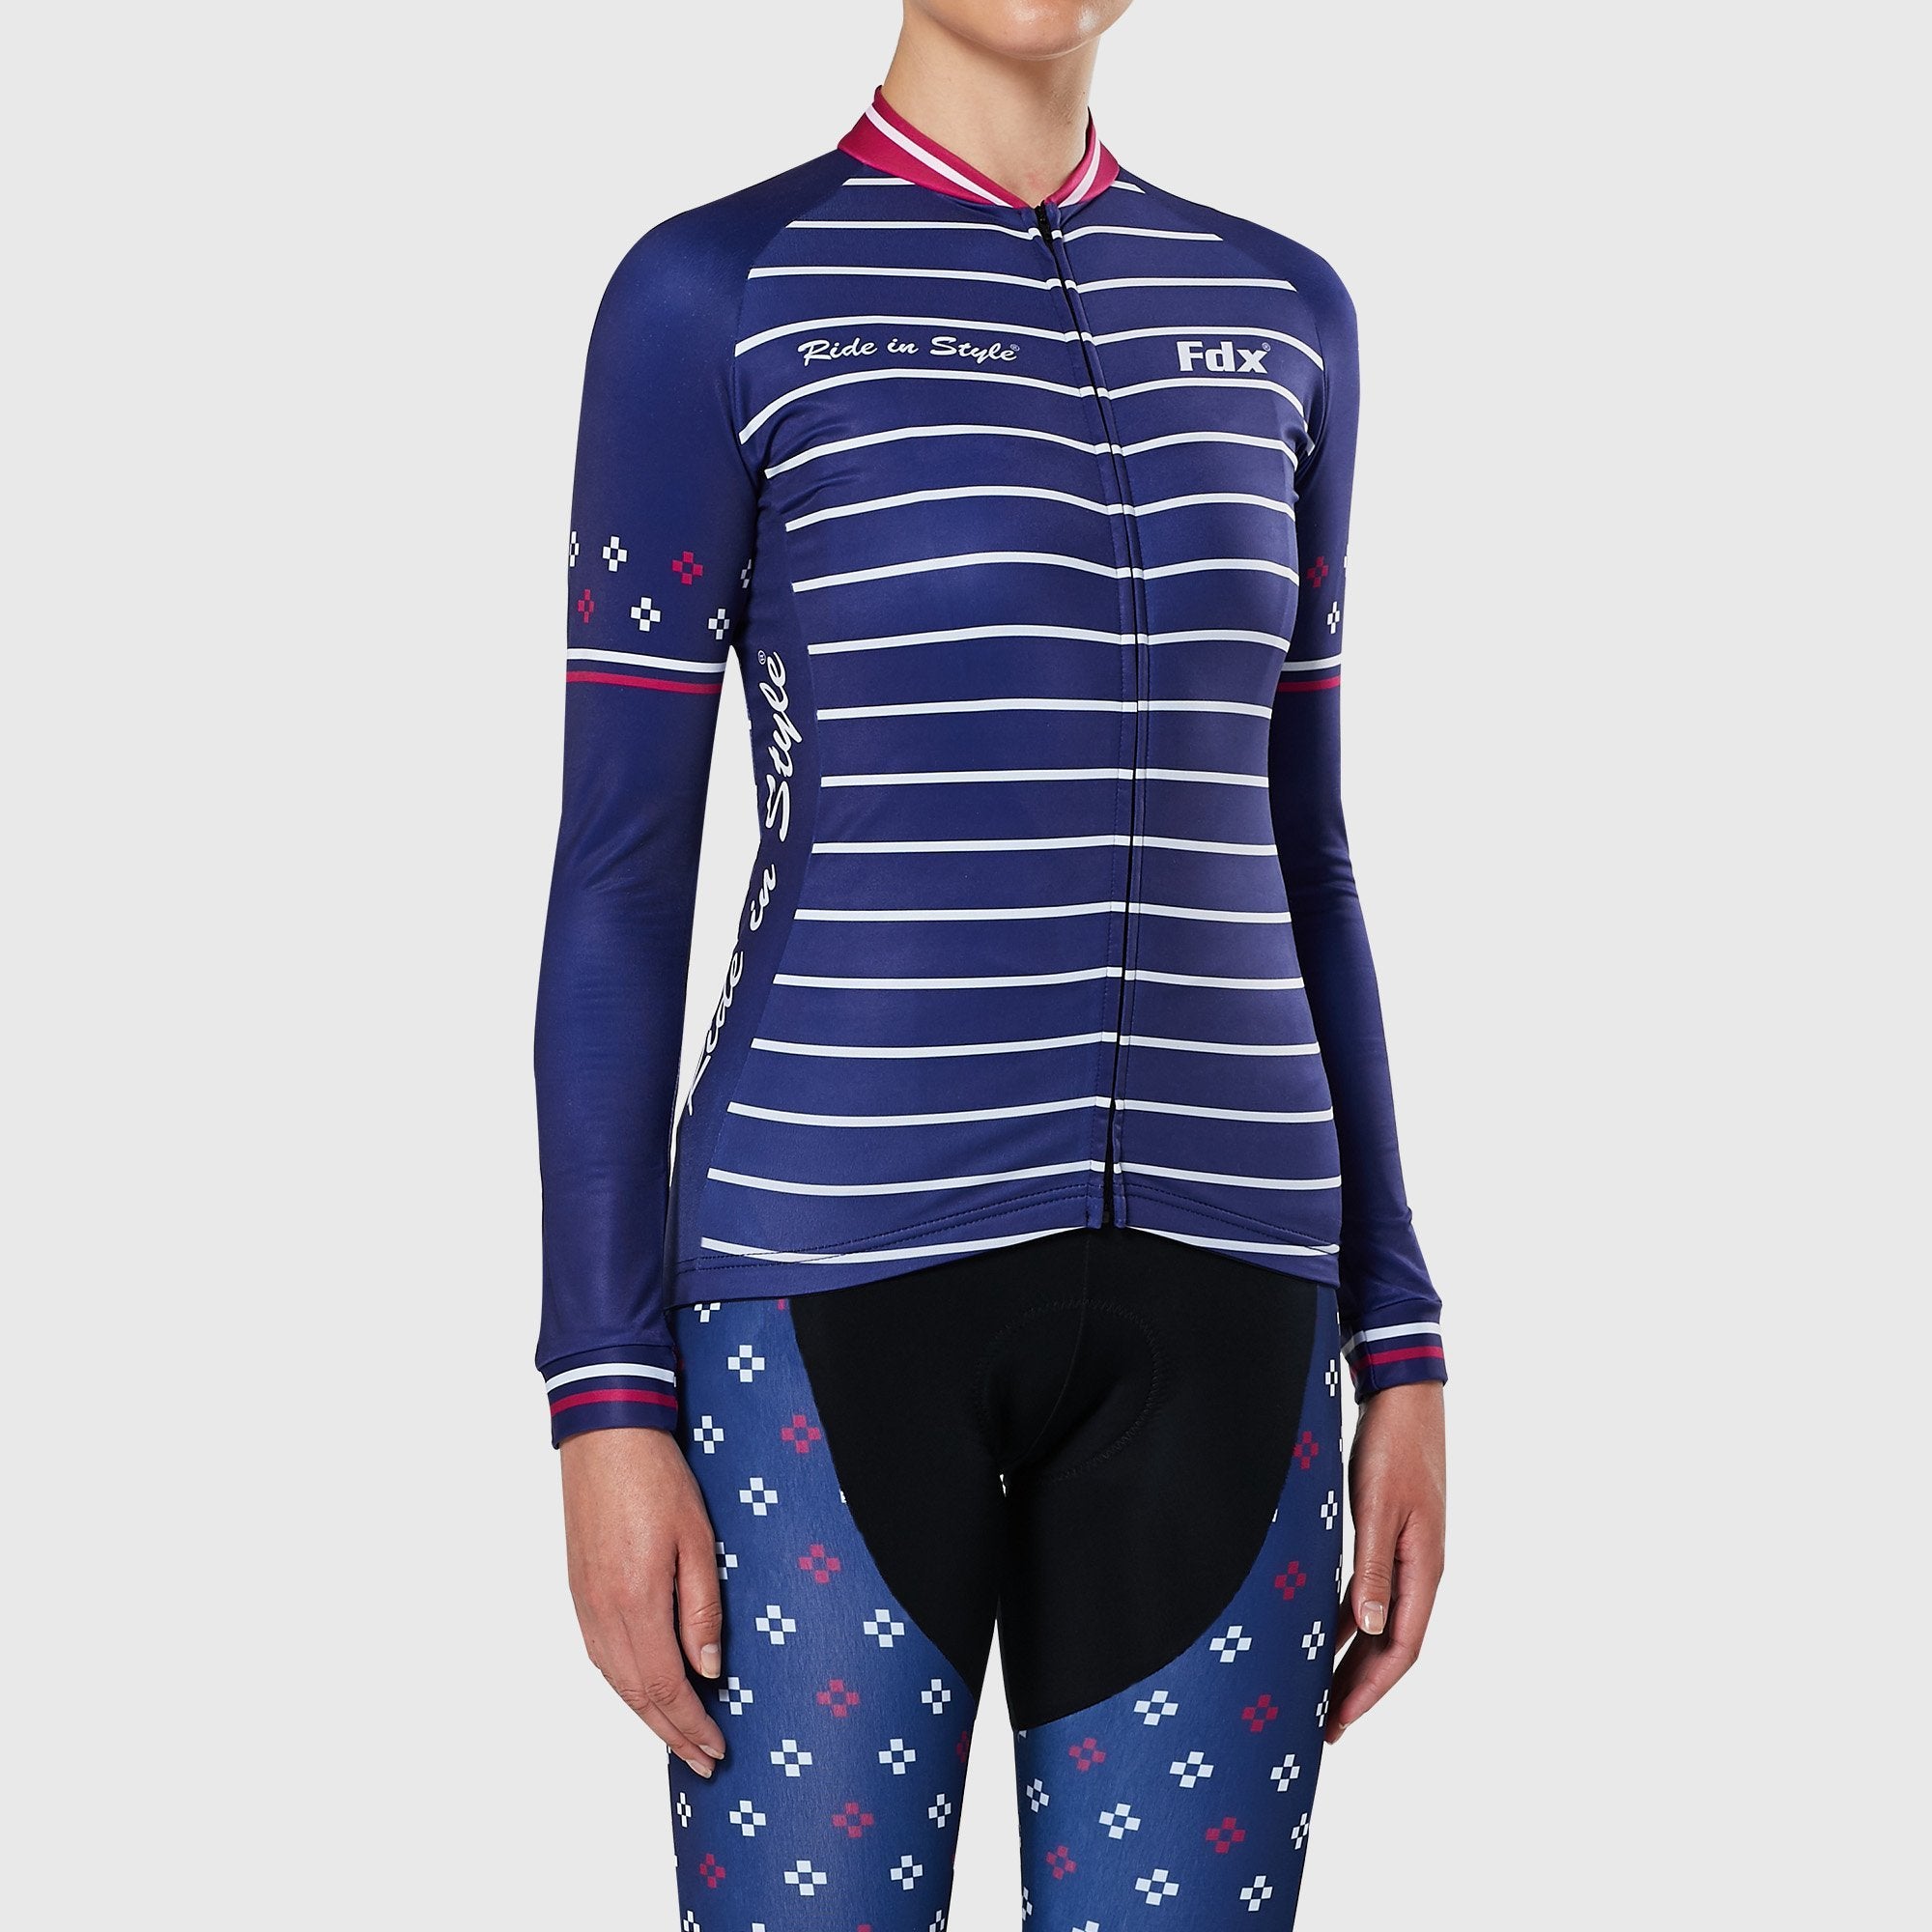 Fdx Best Women's Blue & Pink Long Sleeve Cycling Jersey for Winter Roubaix Thermal Fleece Shirt Road Bike Wear Top Full Zipper, Lightweight  Pockets & Hi viz Reflectors - Ripple